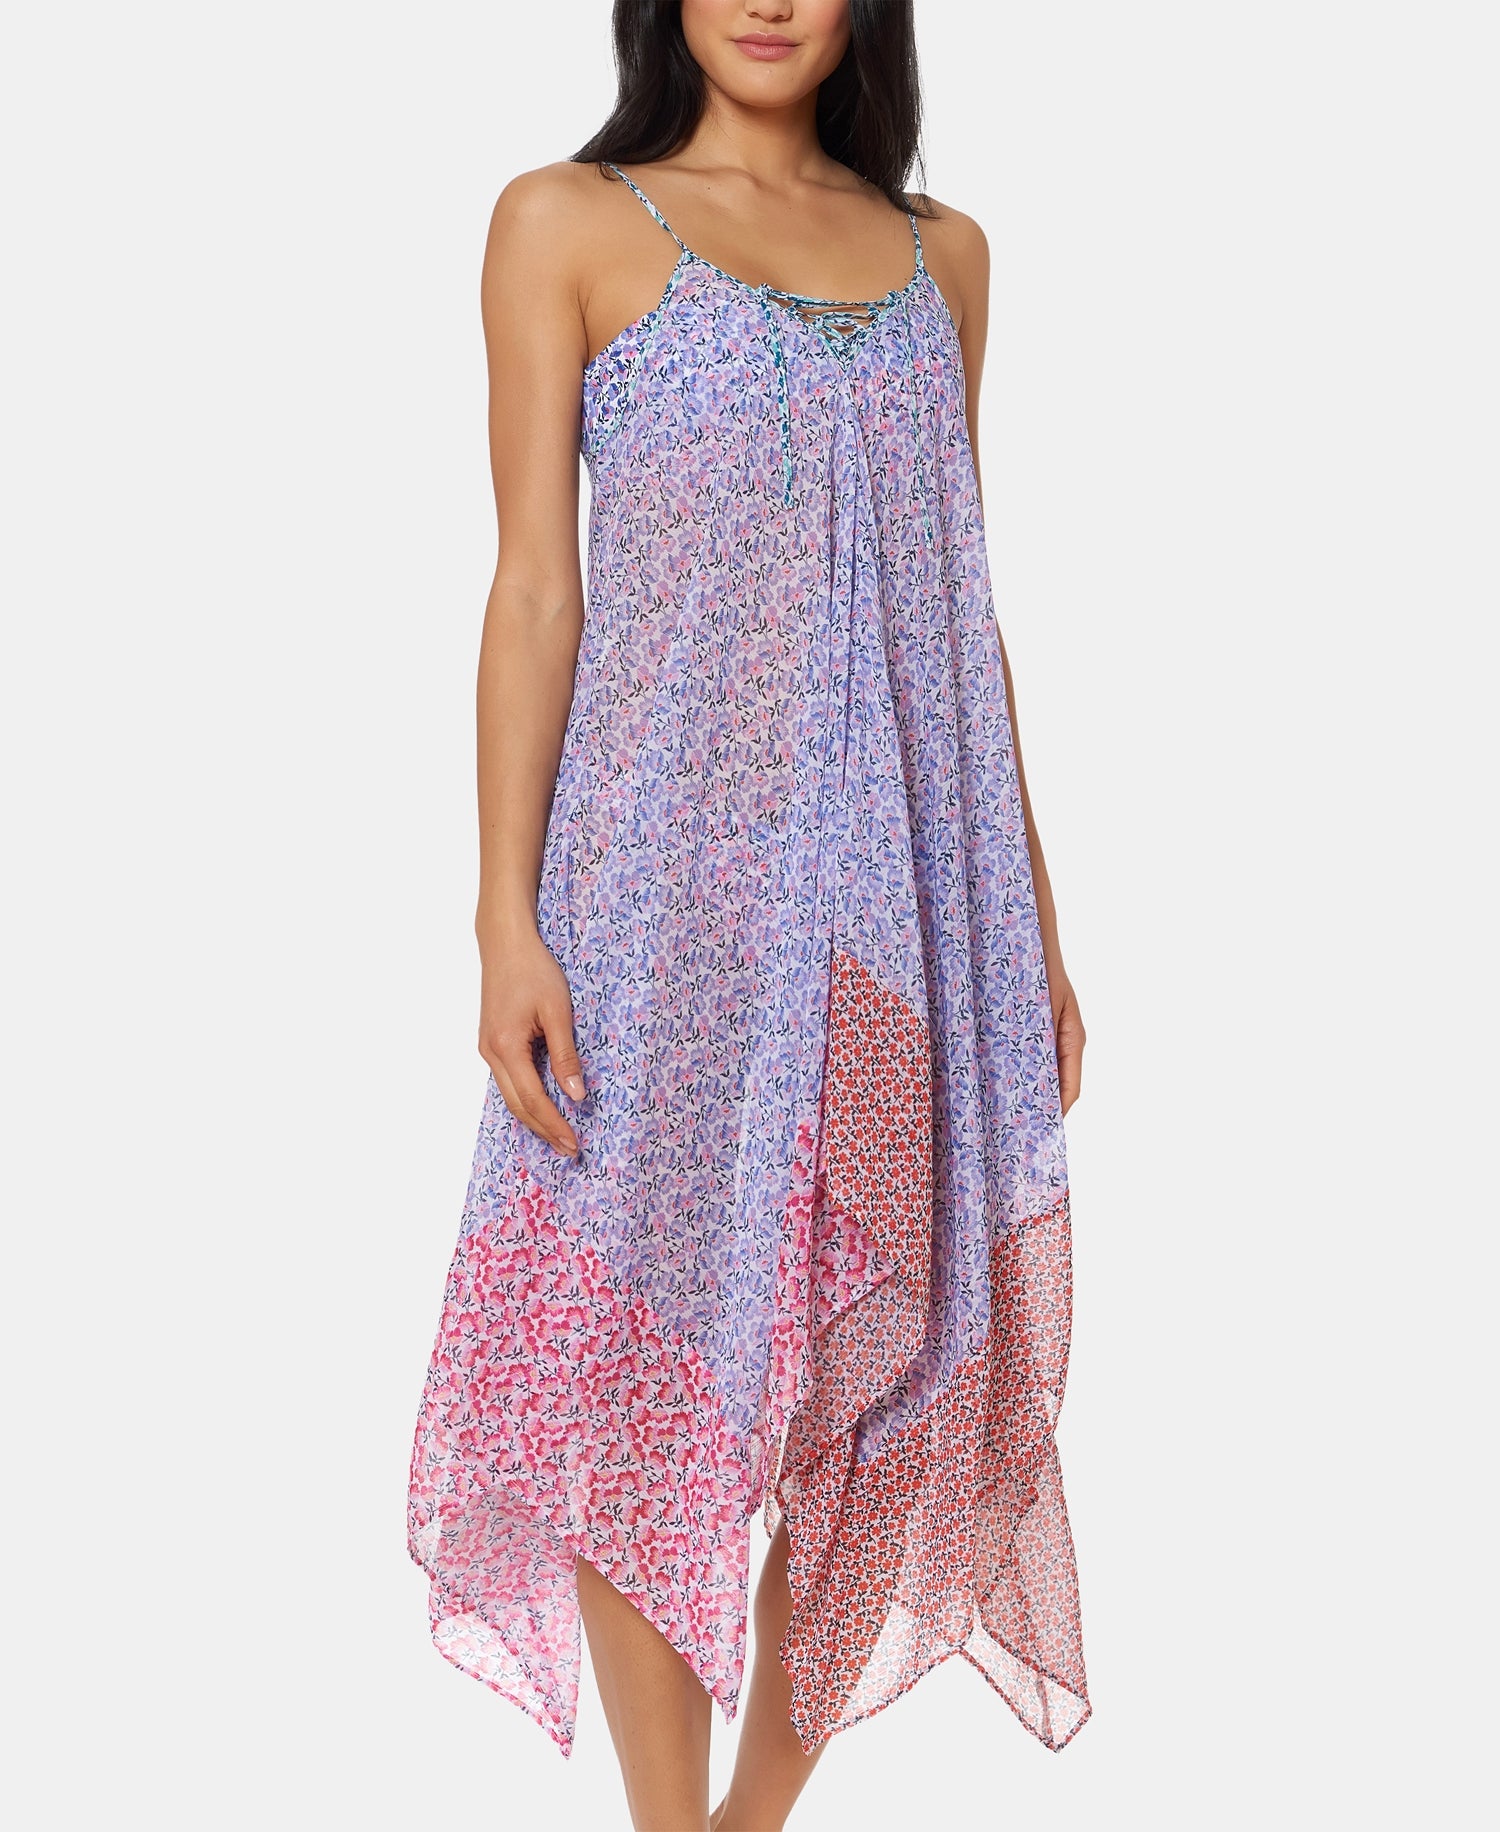 Jessica Simpson Womens Printed Handkerchief-Hem Cover Up Dress Multi X-Large